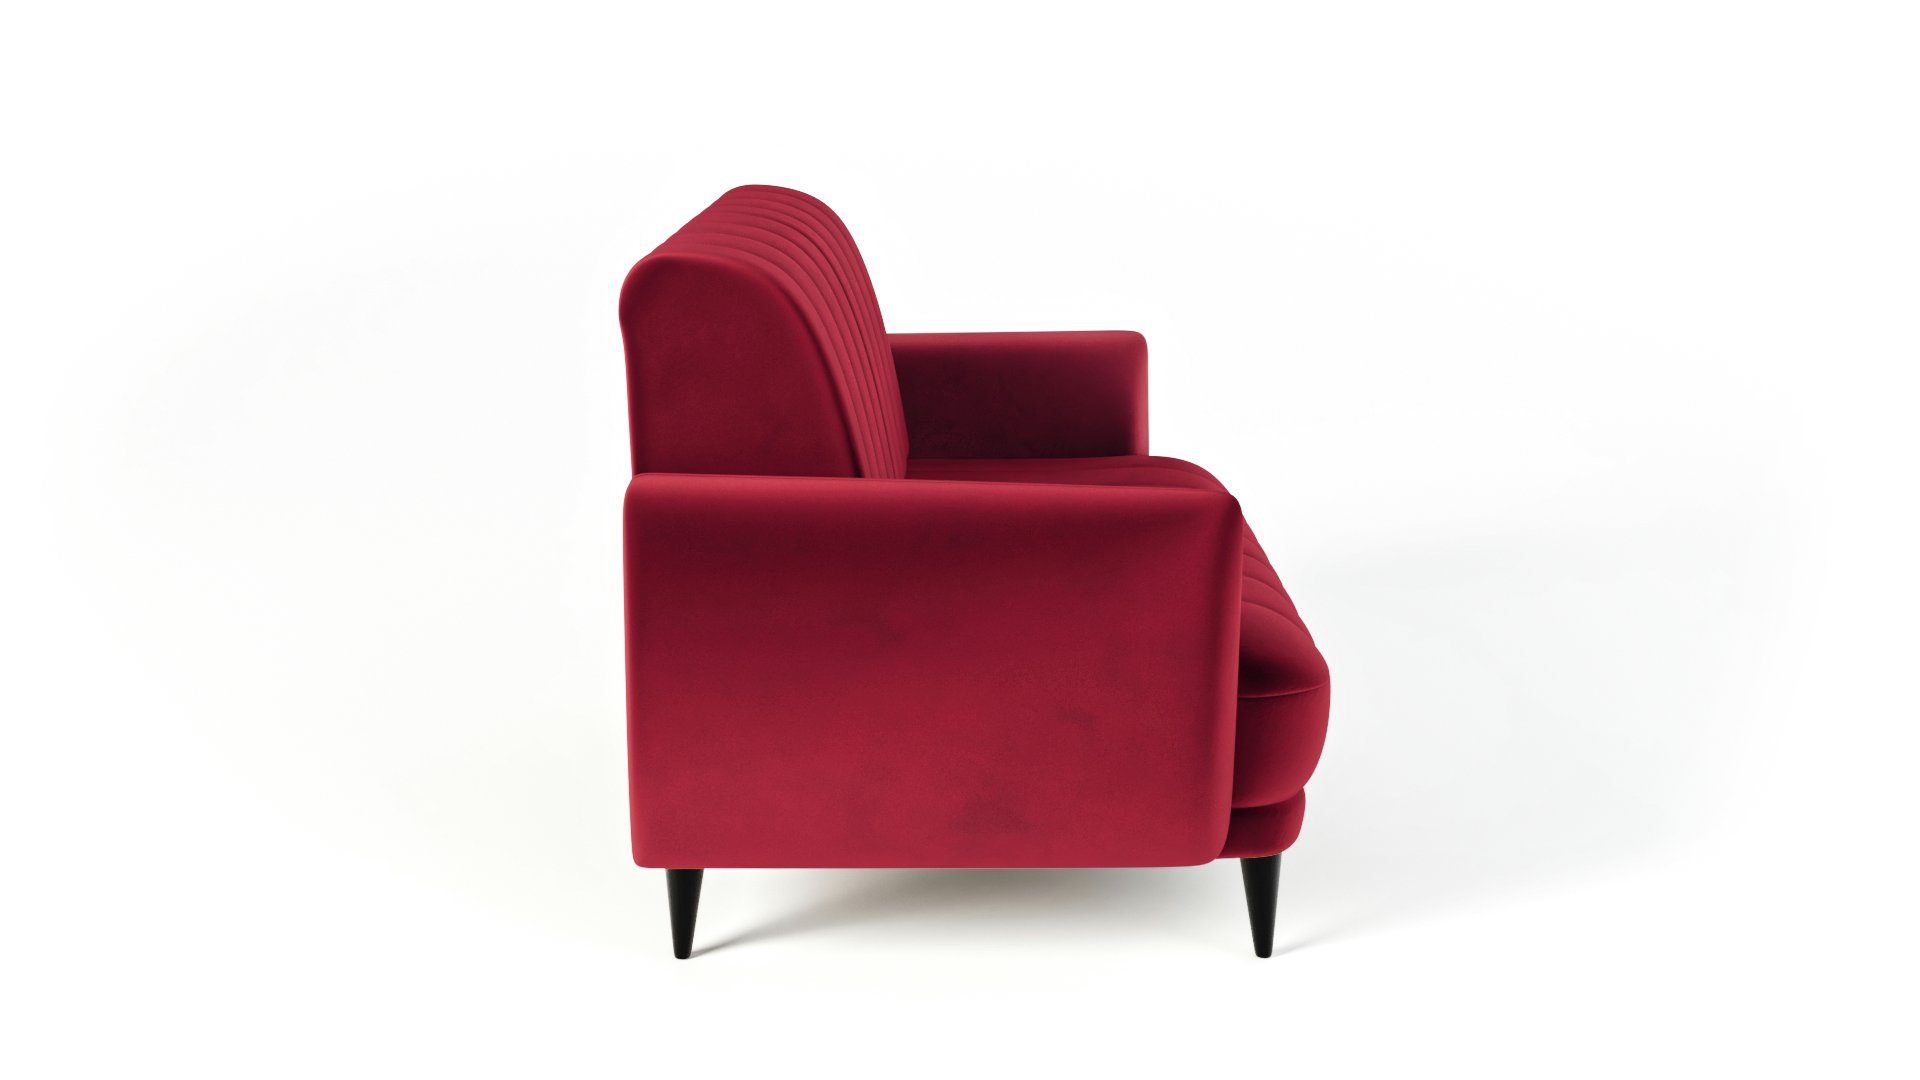 Zweisitzer-Sofa Elegantes Rolo 2 2-Sitzer Rot Sofa Siblo Zweisitziges -